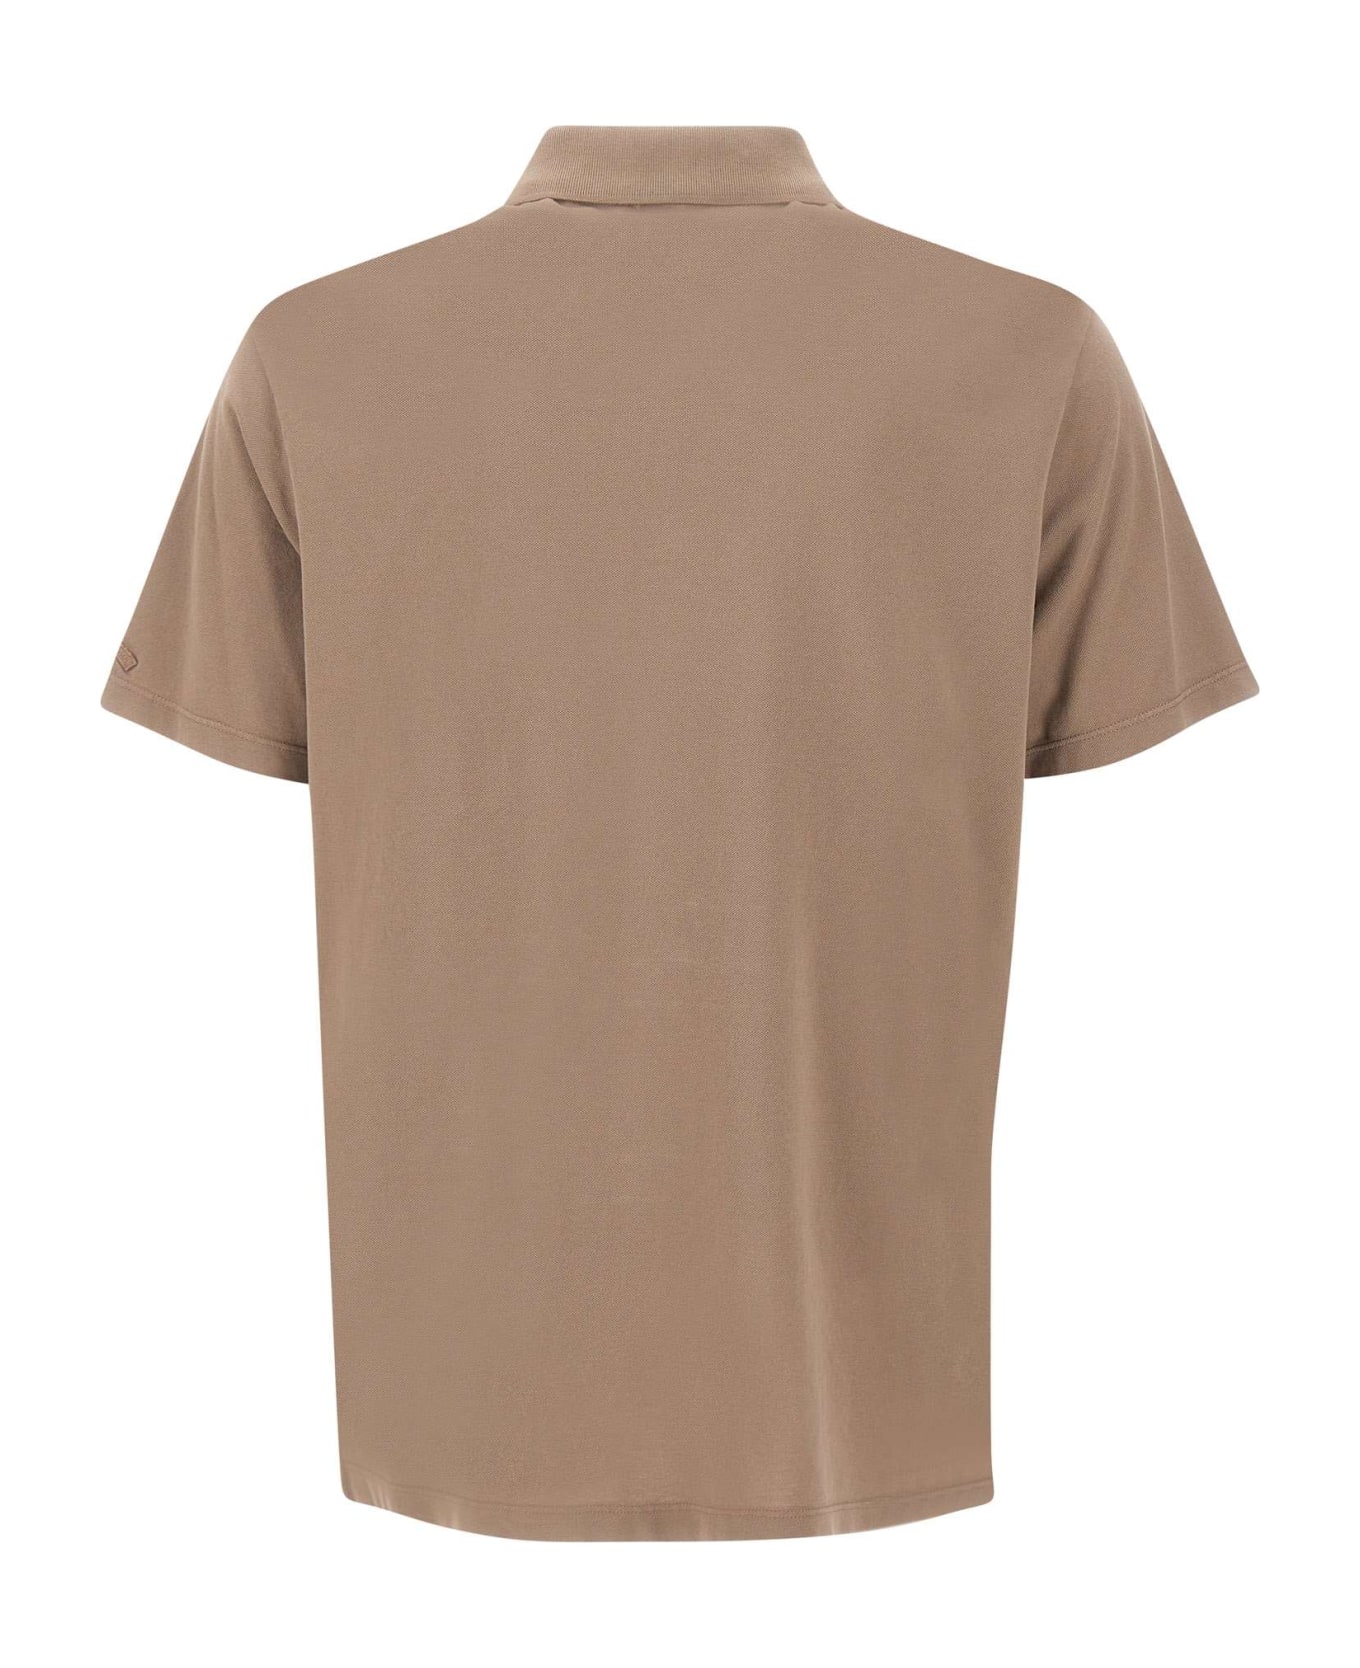 Paul&Shark Cotton Polo Shirt - BEIGE